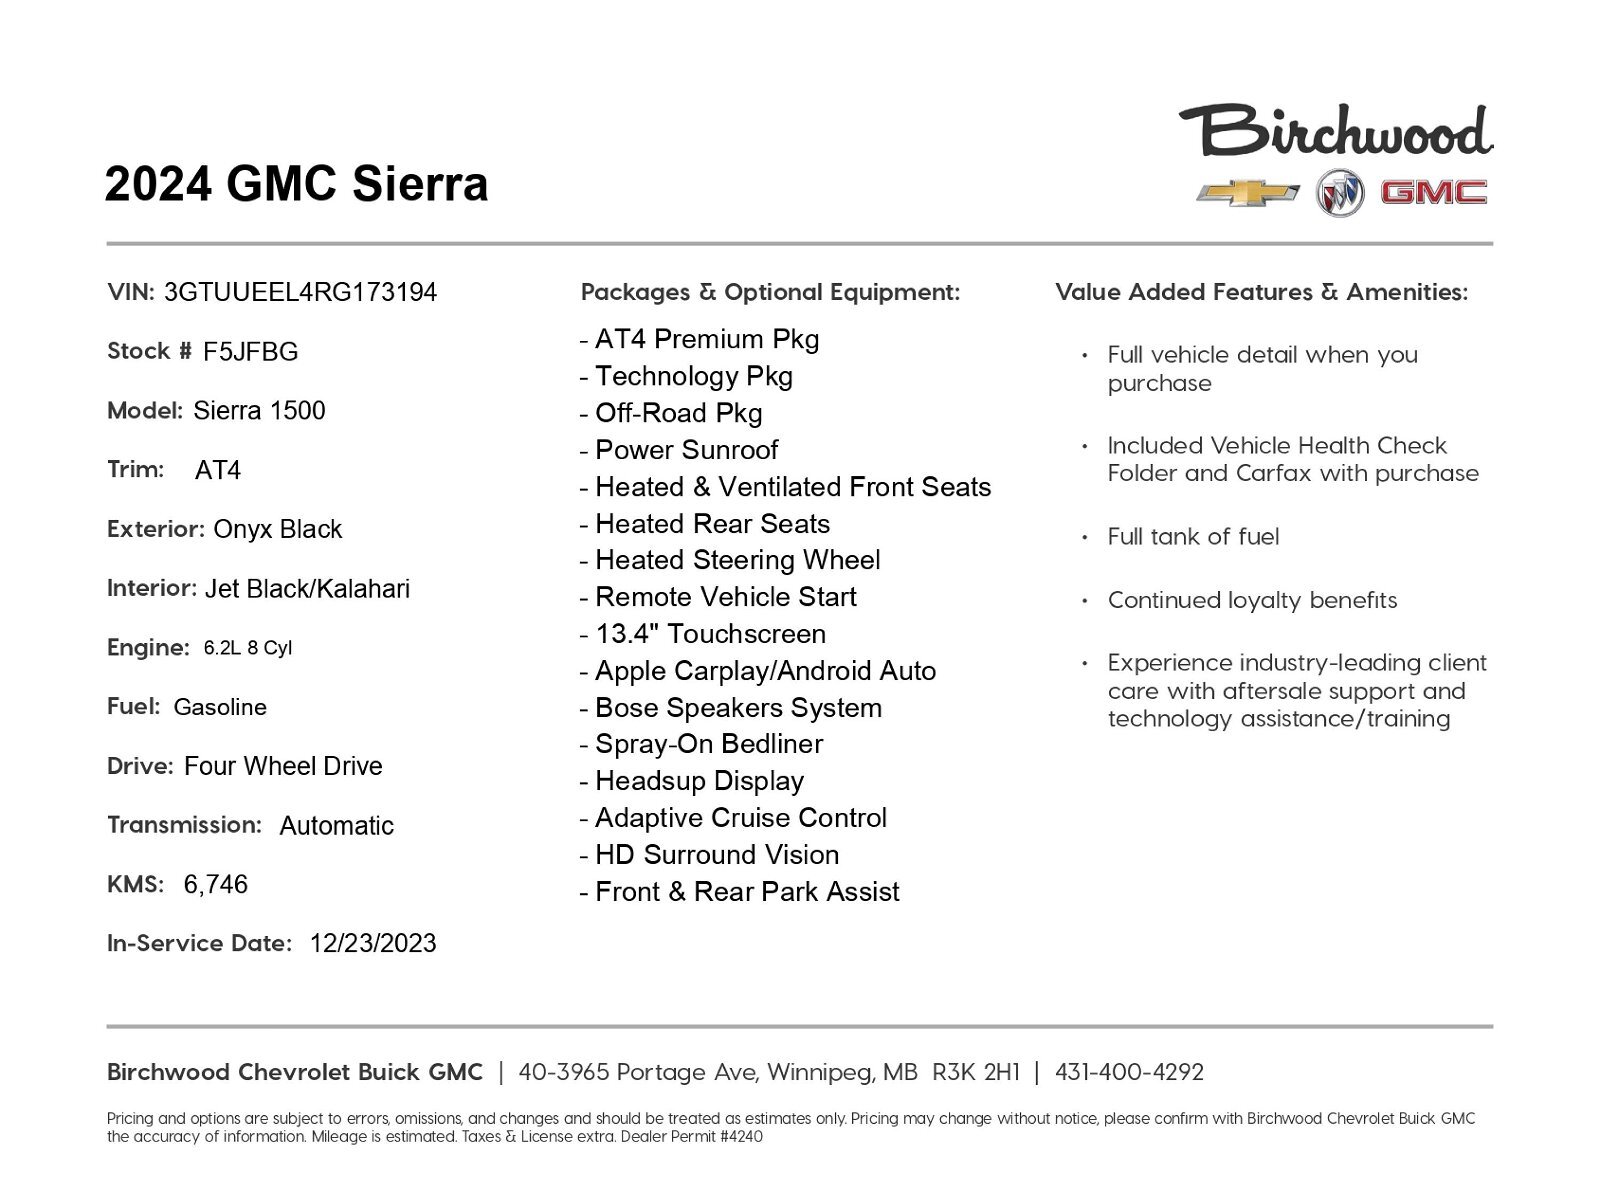 2024 GMC Sierra 1500 AT4 2-year Maintenance Free!